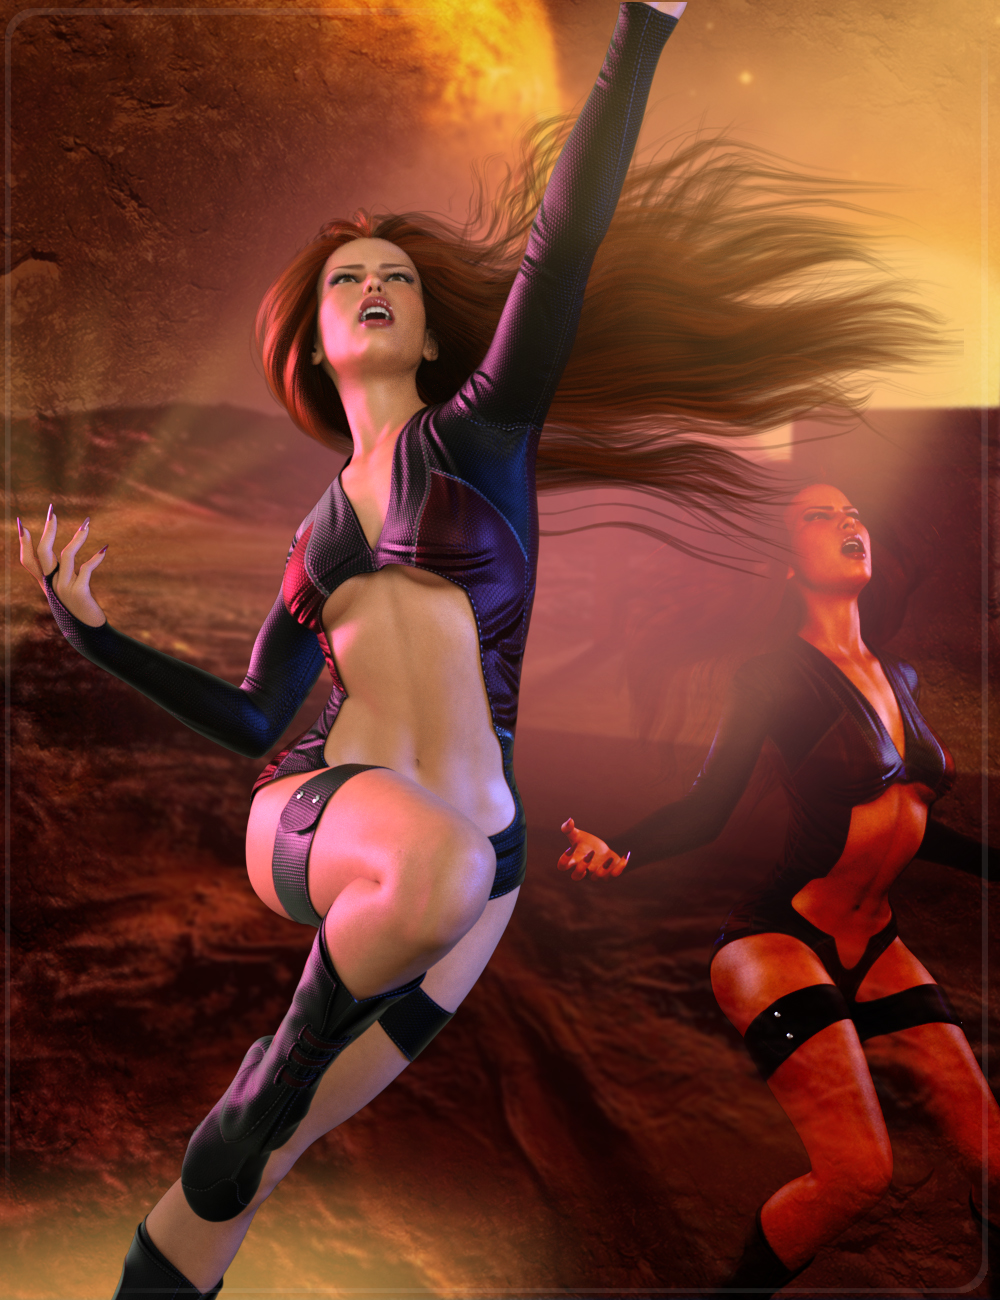 Z Epic Heroine Poses for Genesis 8 Female by: Zeddicuss, 3D Models by Daz 3D